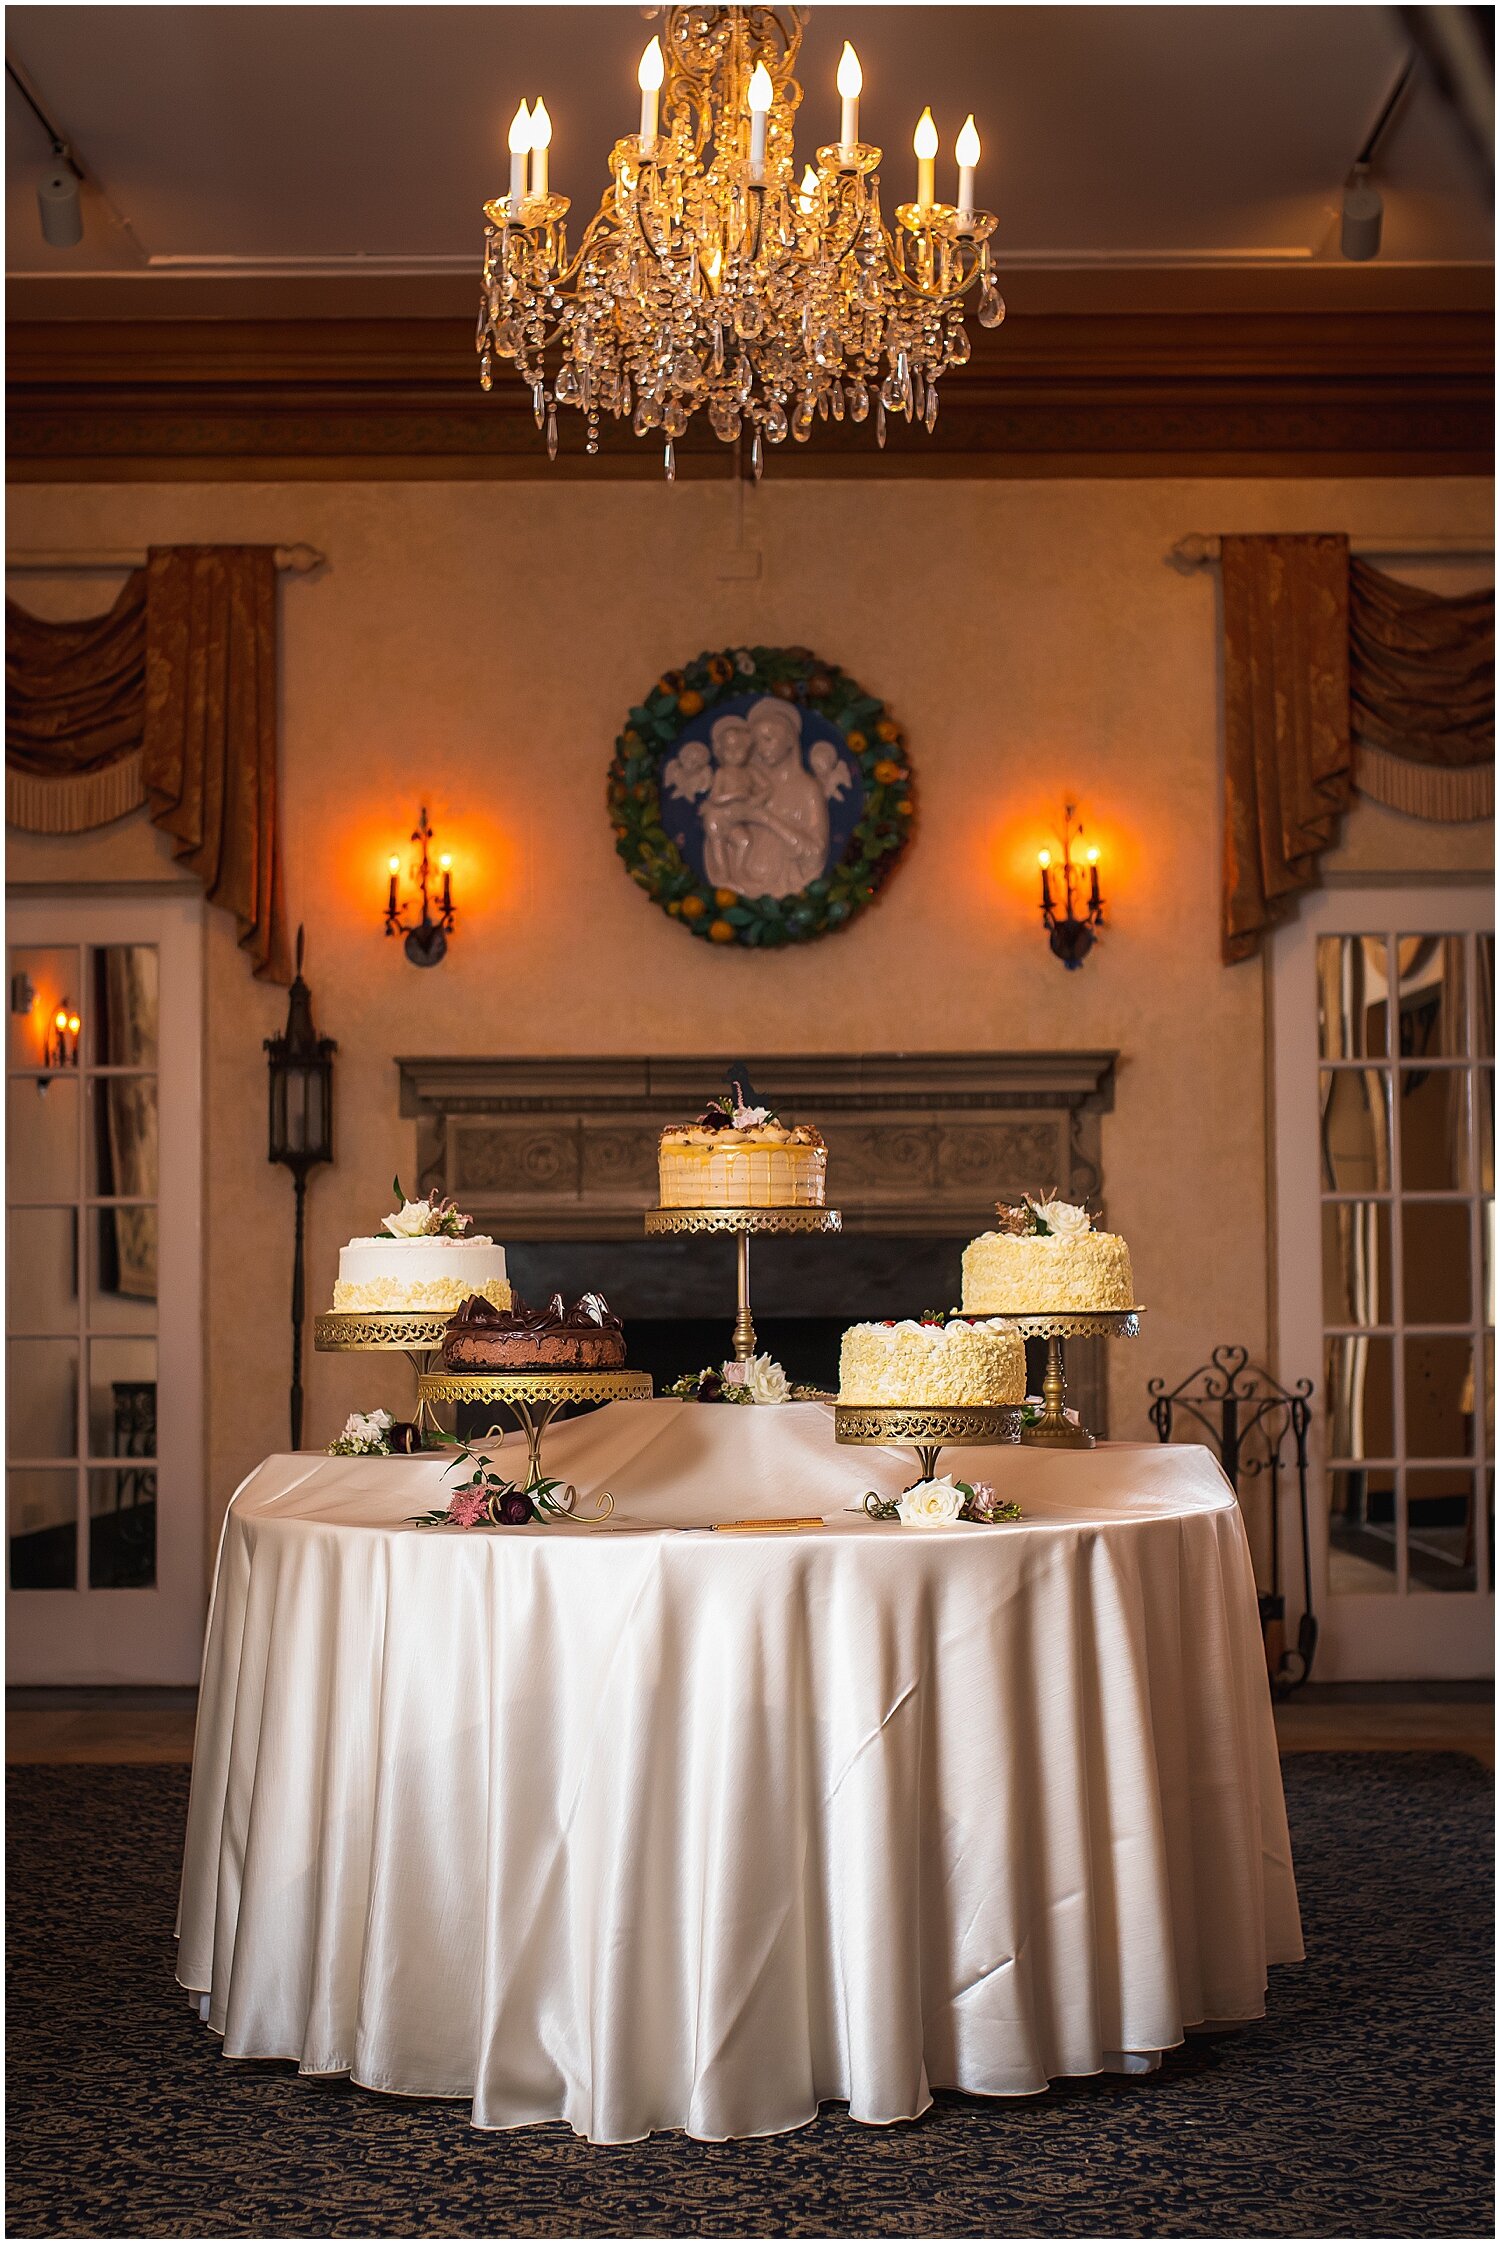  cake and dessert table display 